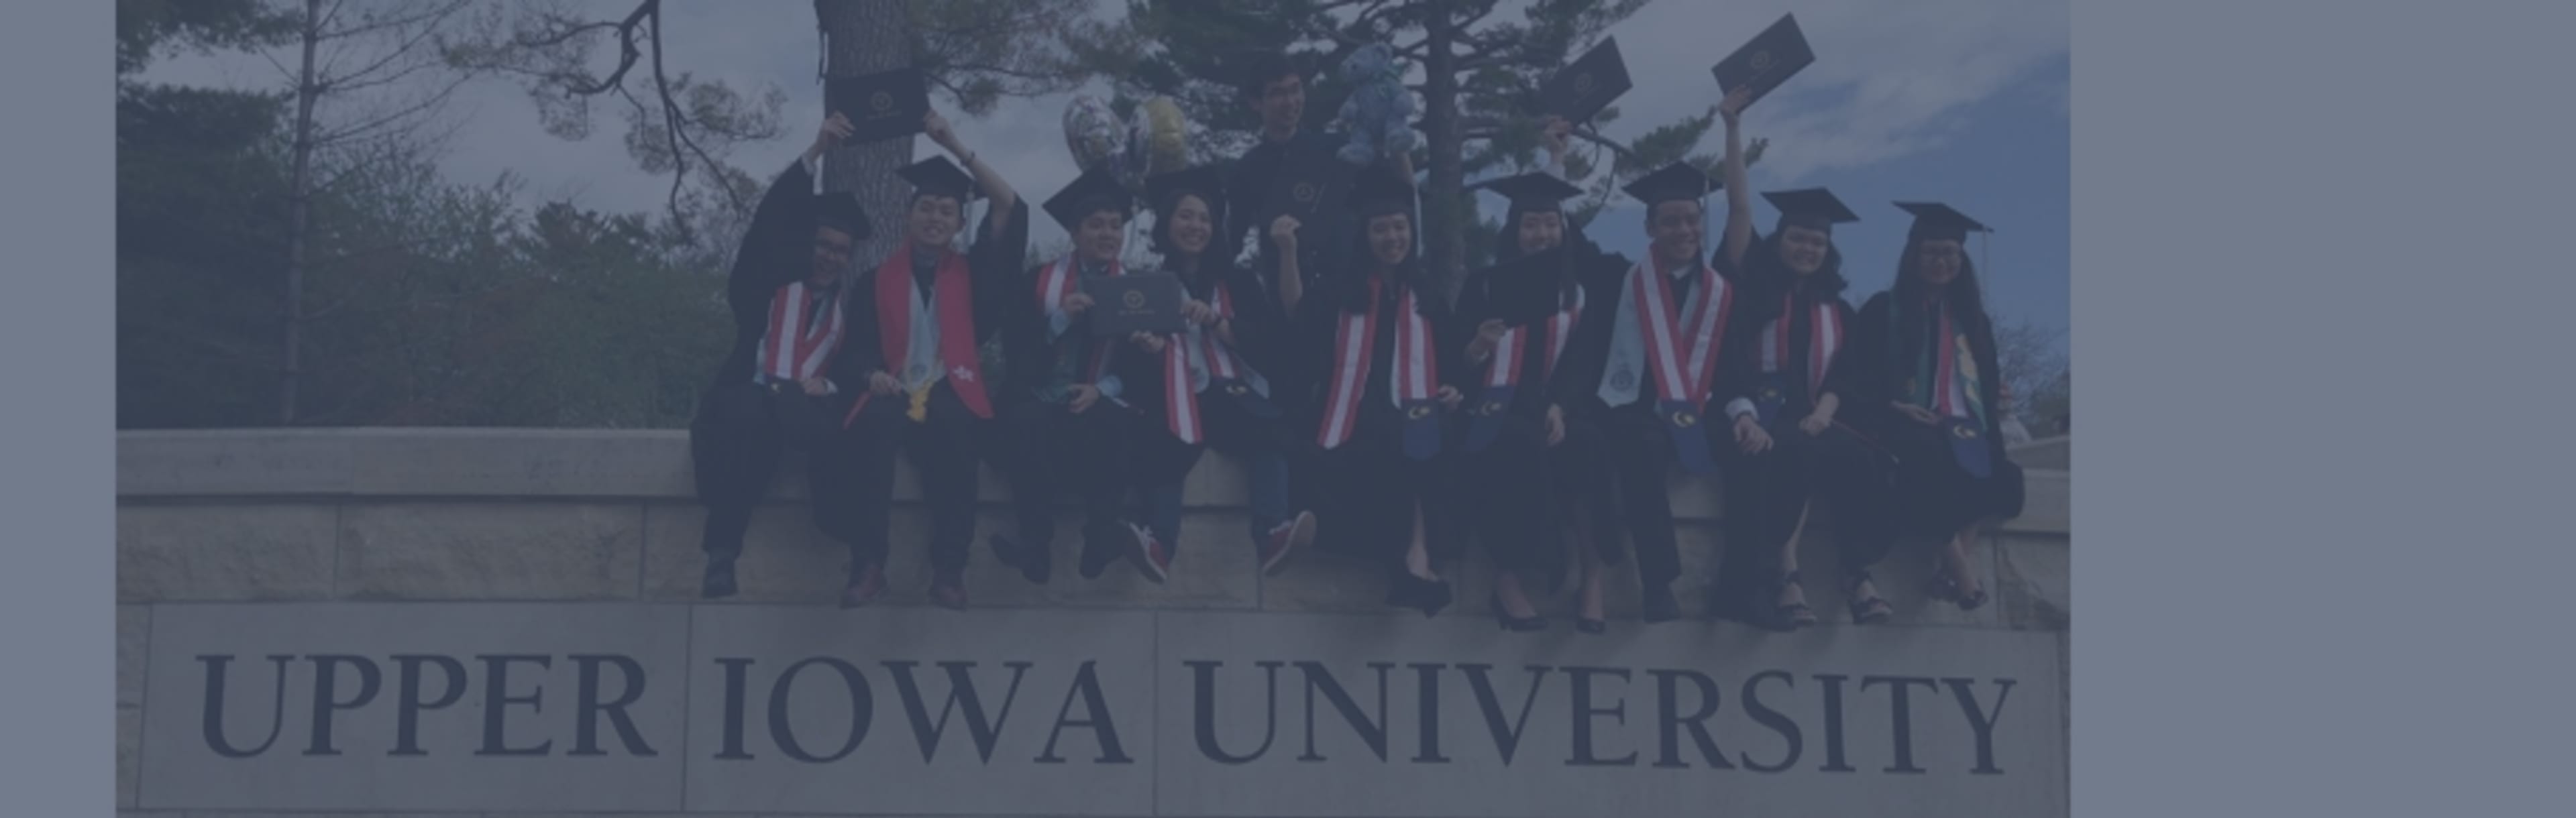 Upper Iowa University MBA organisatsiooni arengus